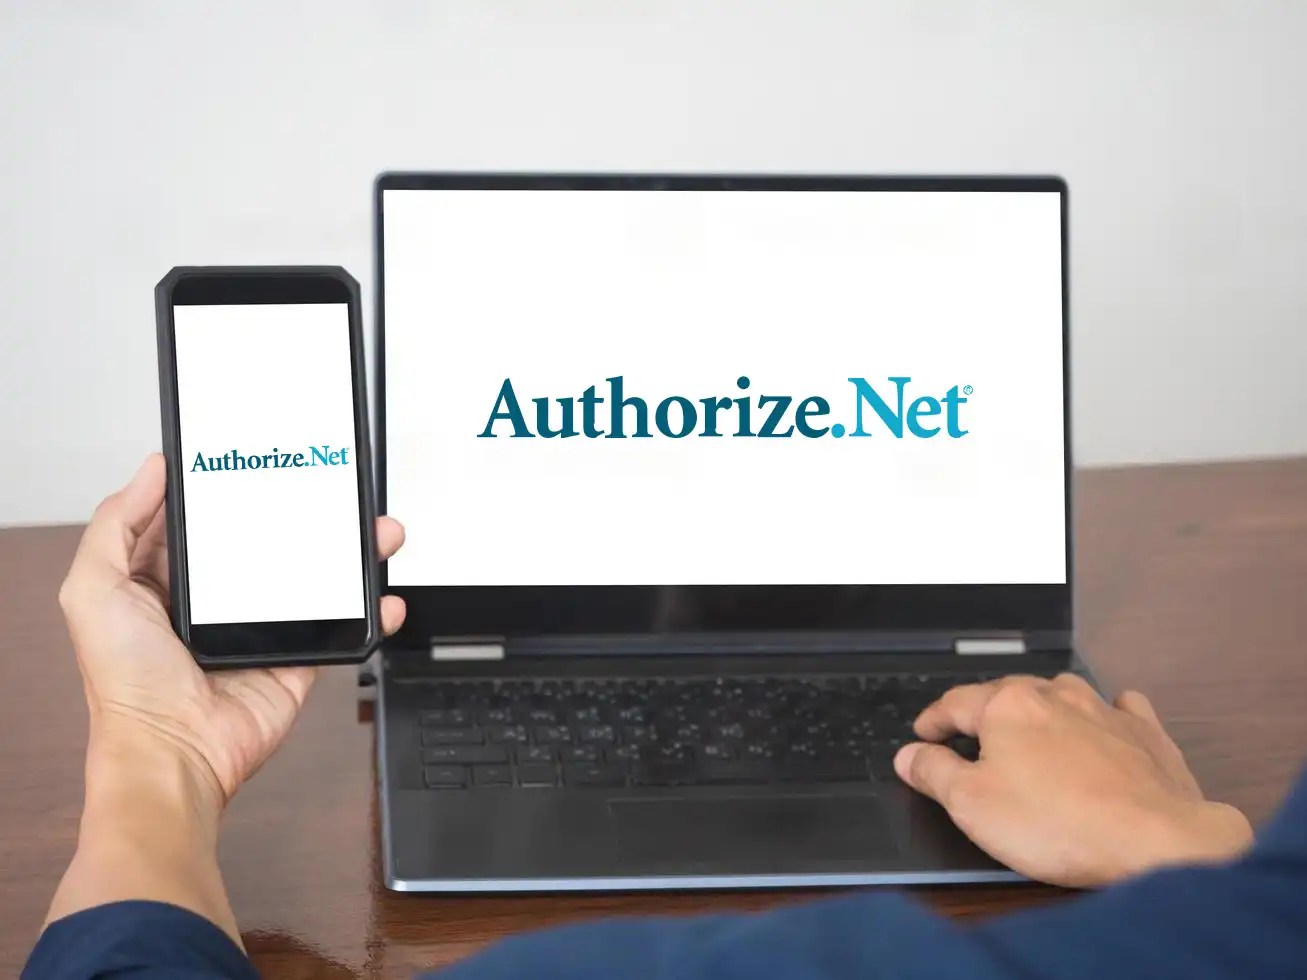 Authorized.net